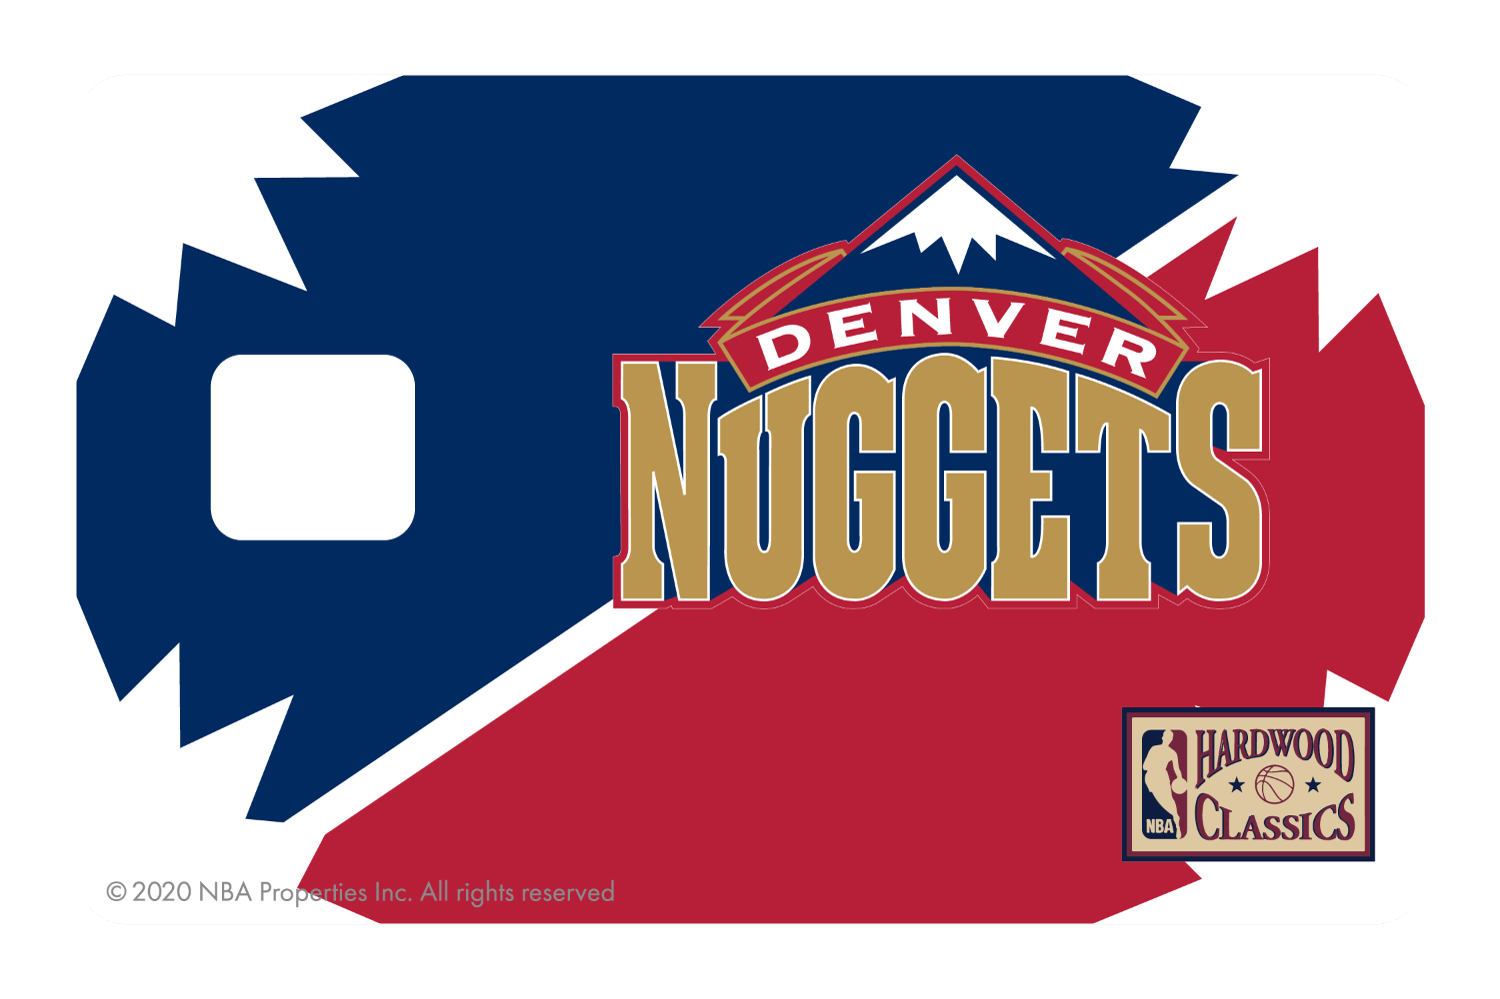 Denver Nuggets: Uptempo Hardwood Classics